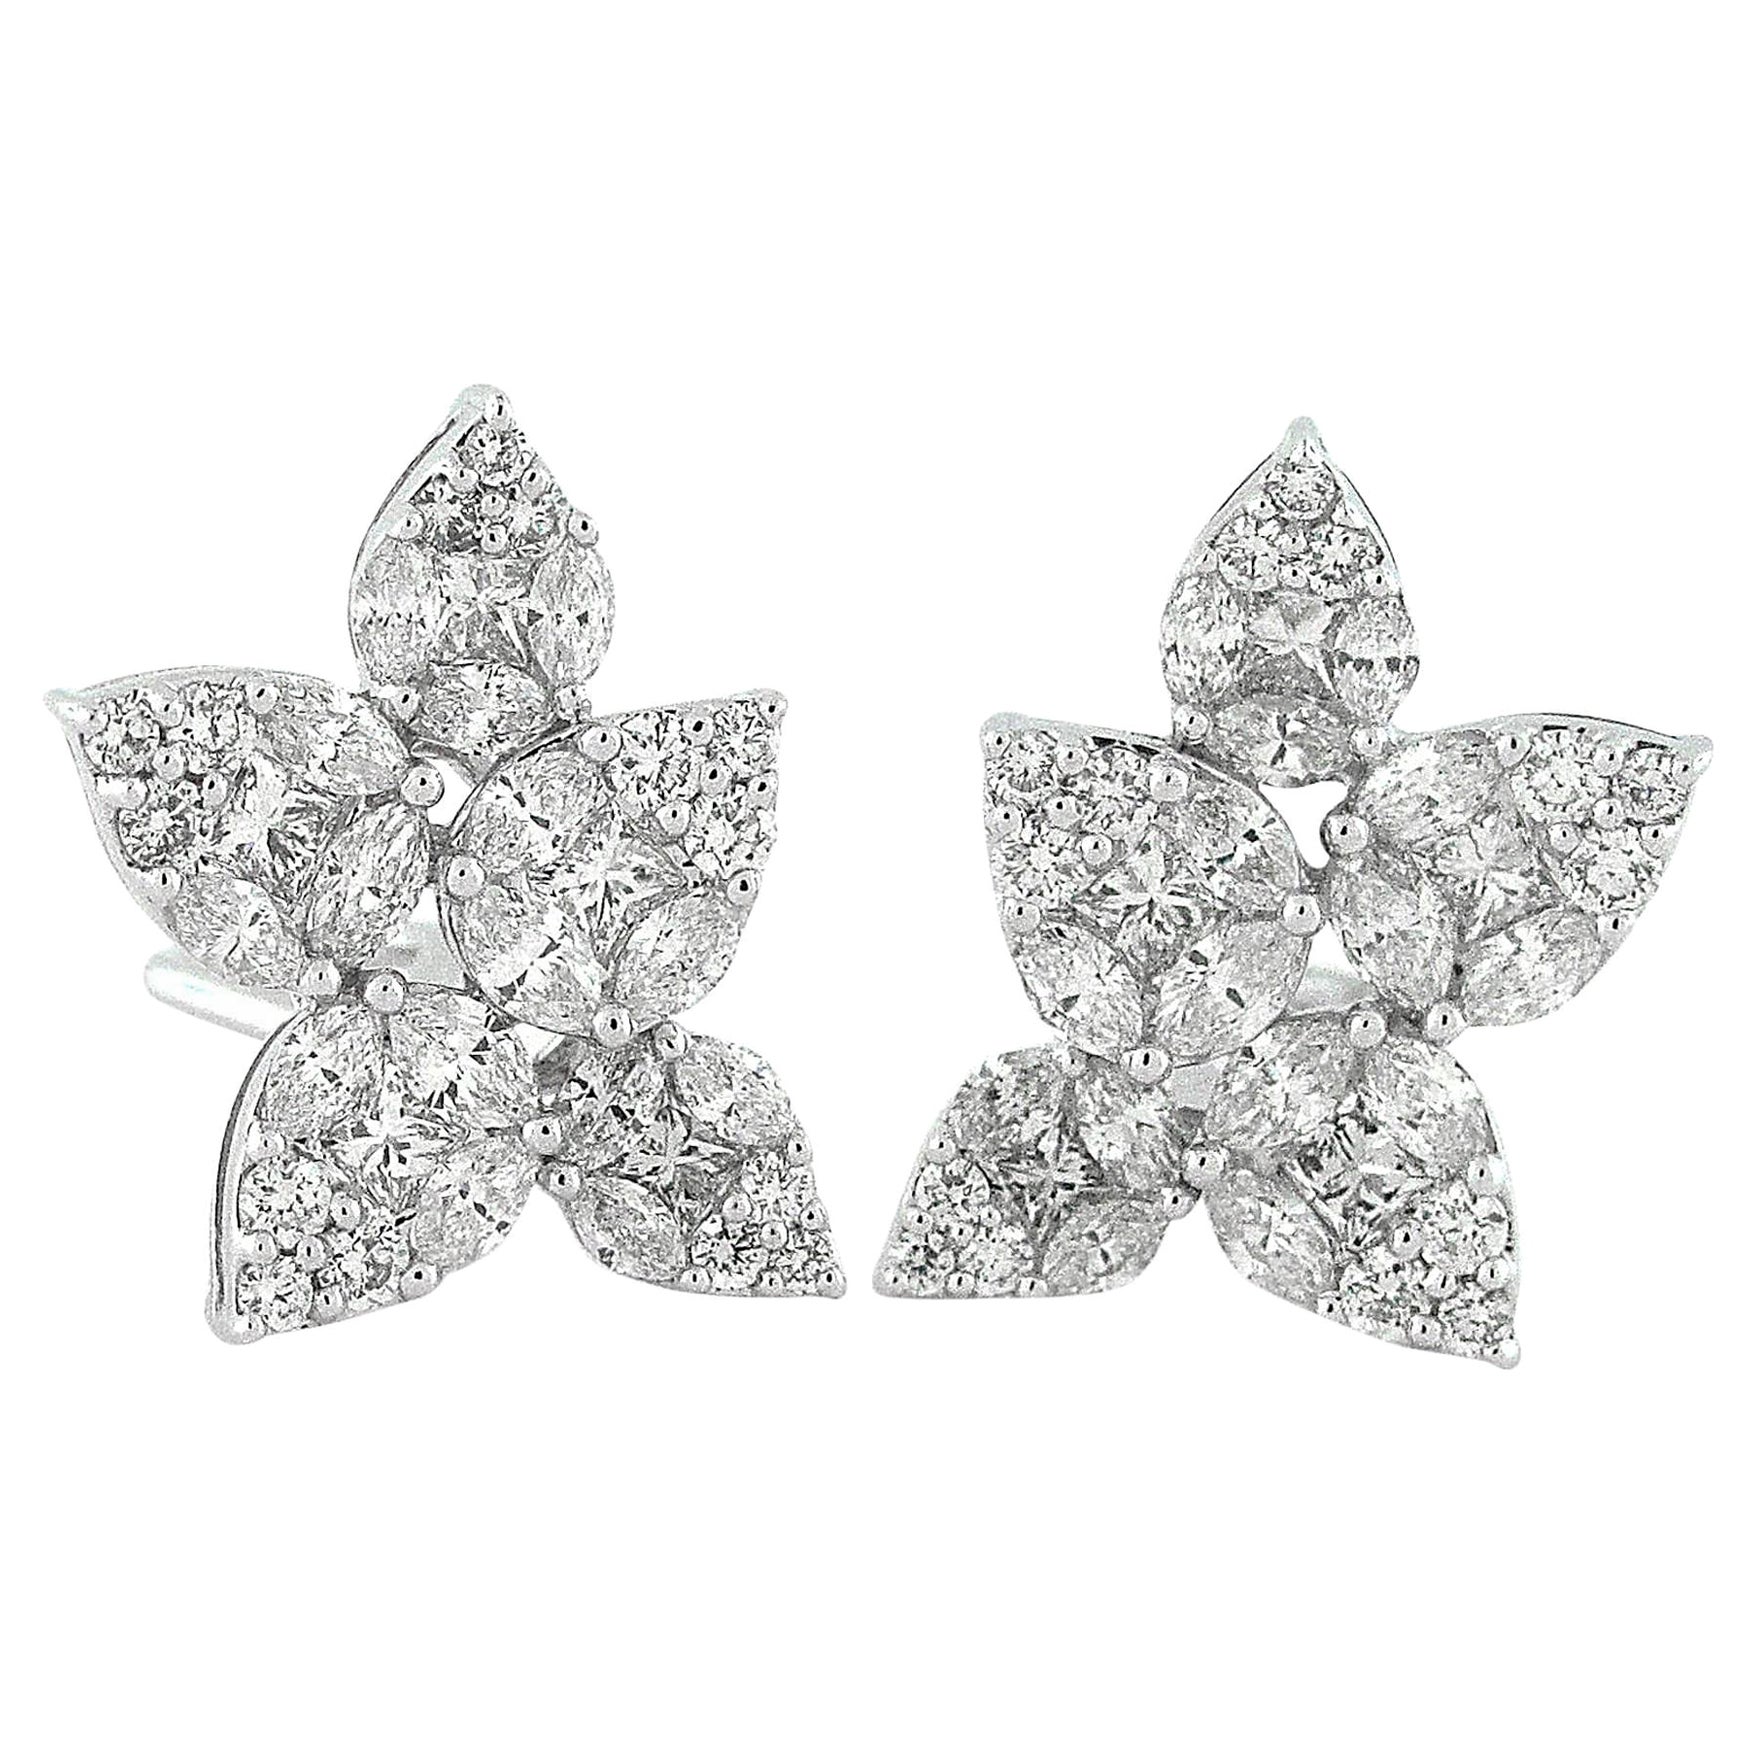 4 Carat Diamond Cluster Stud Earrings For Sale